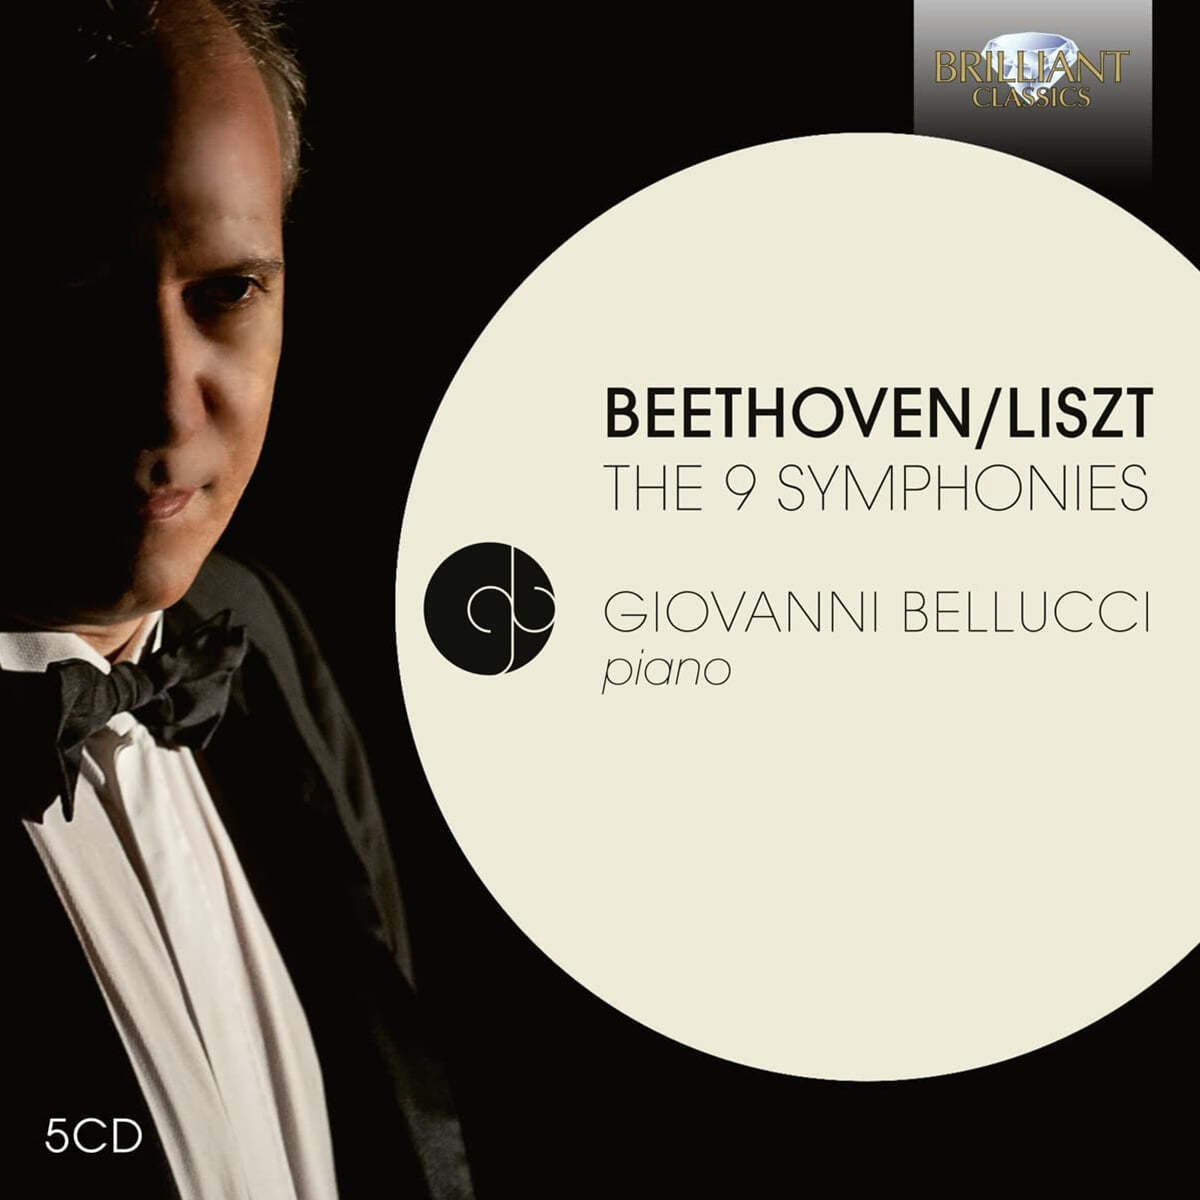 Giovanni Bellucci 베토벤: 교향곡 전곡 [리스트 피아노 편곡 버전] (Liszt-Beethoven: The 9 Symphonies) 